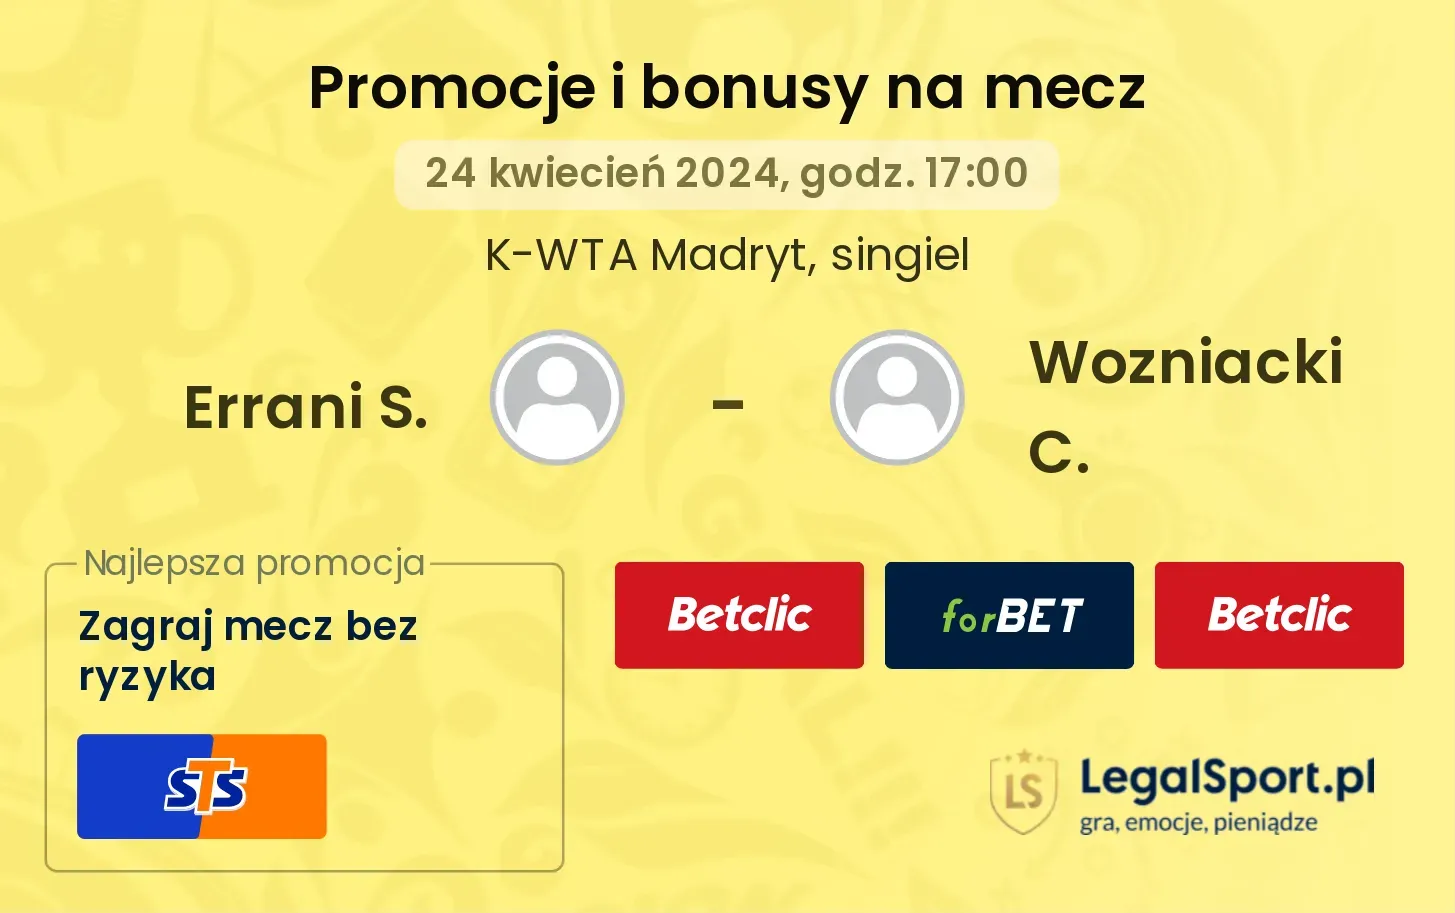 Errani S. - Wozniacki C. promocje bonusy na mecz